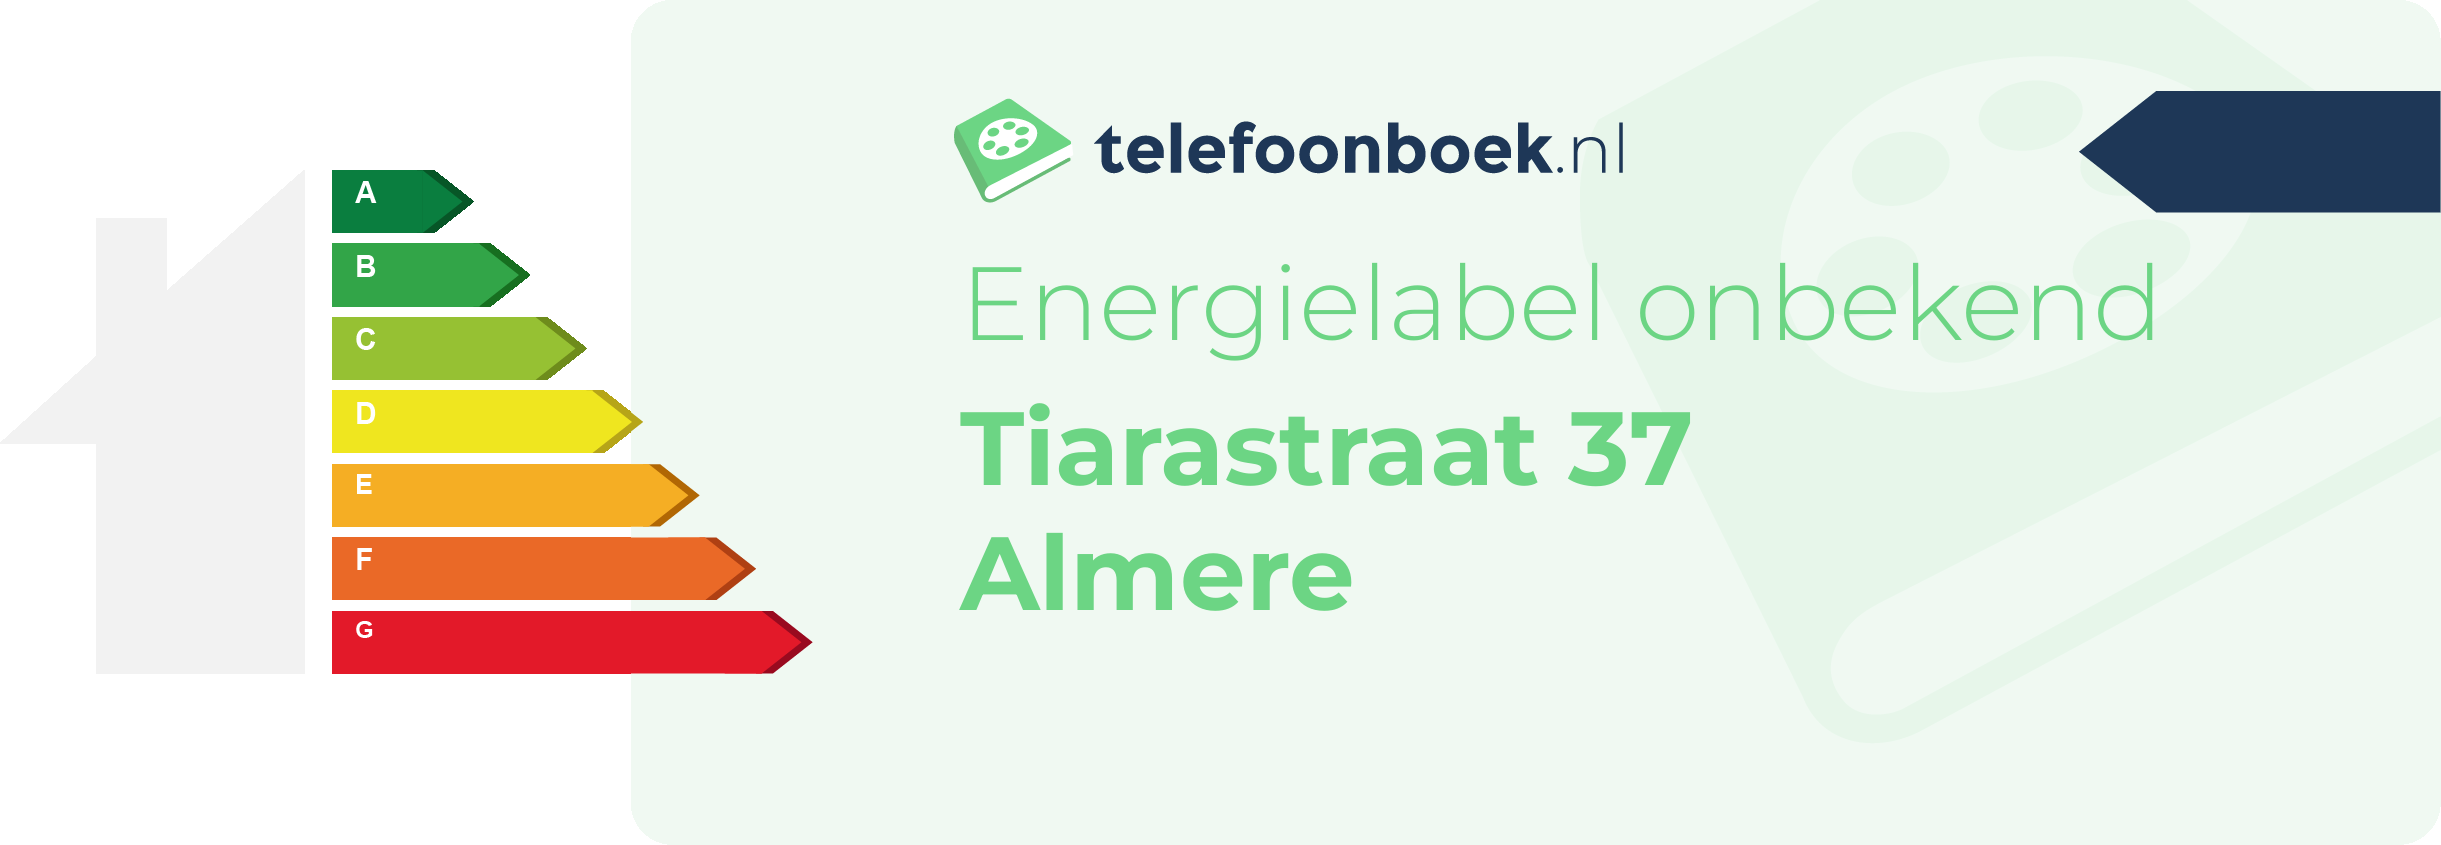 Energielabel Tiarastraat 37 Almere